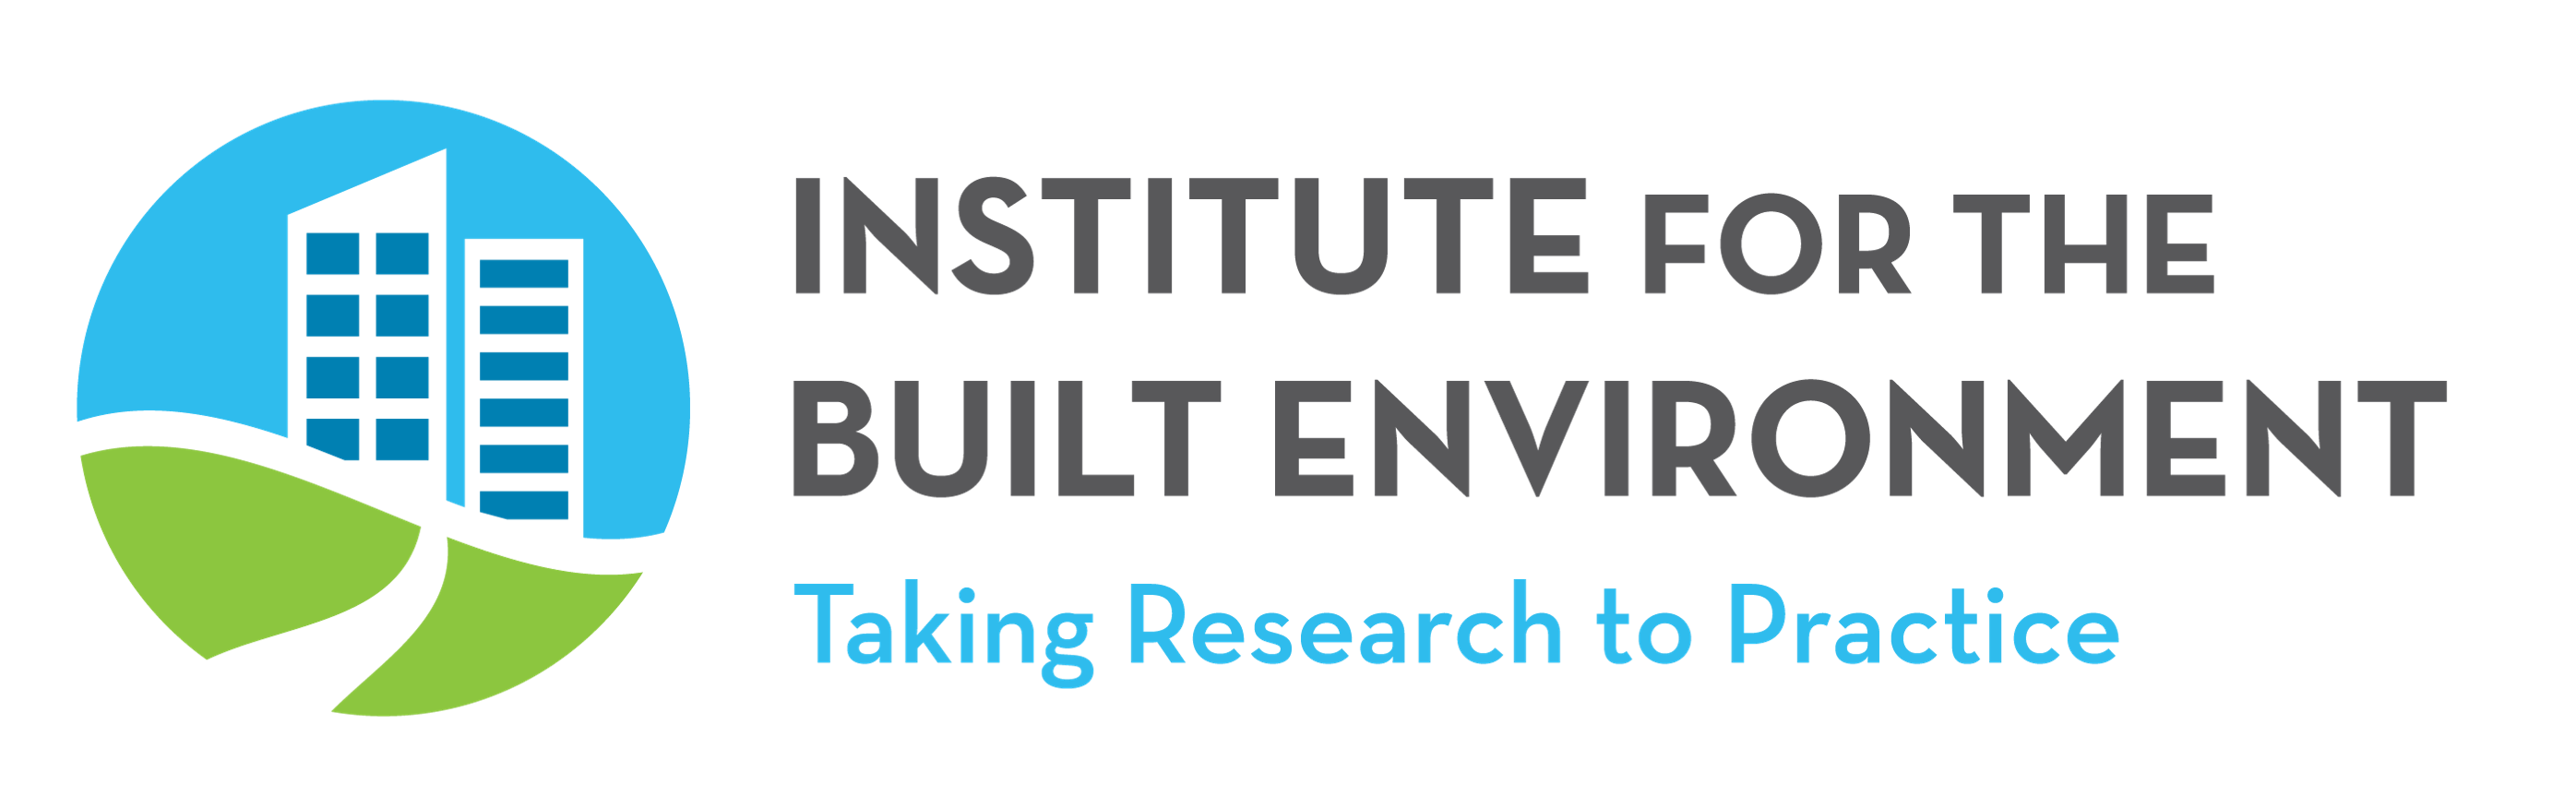 Institute for the Built Environment Blog